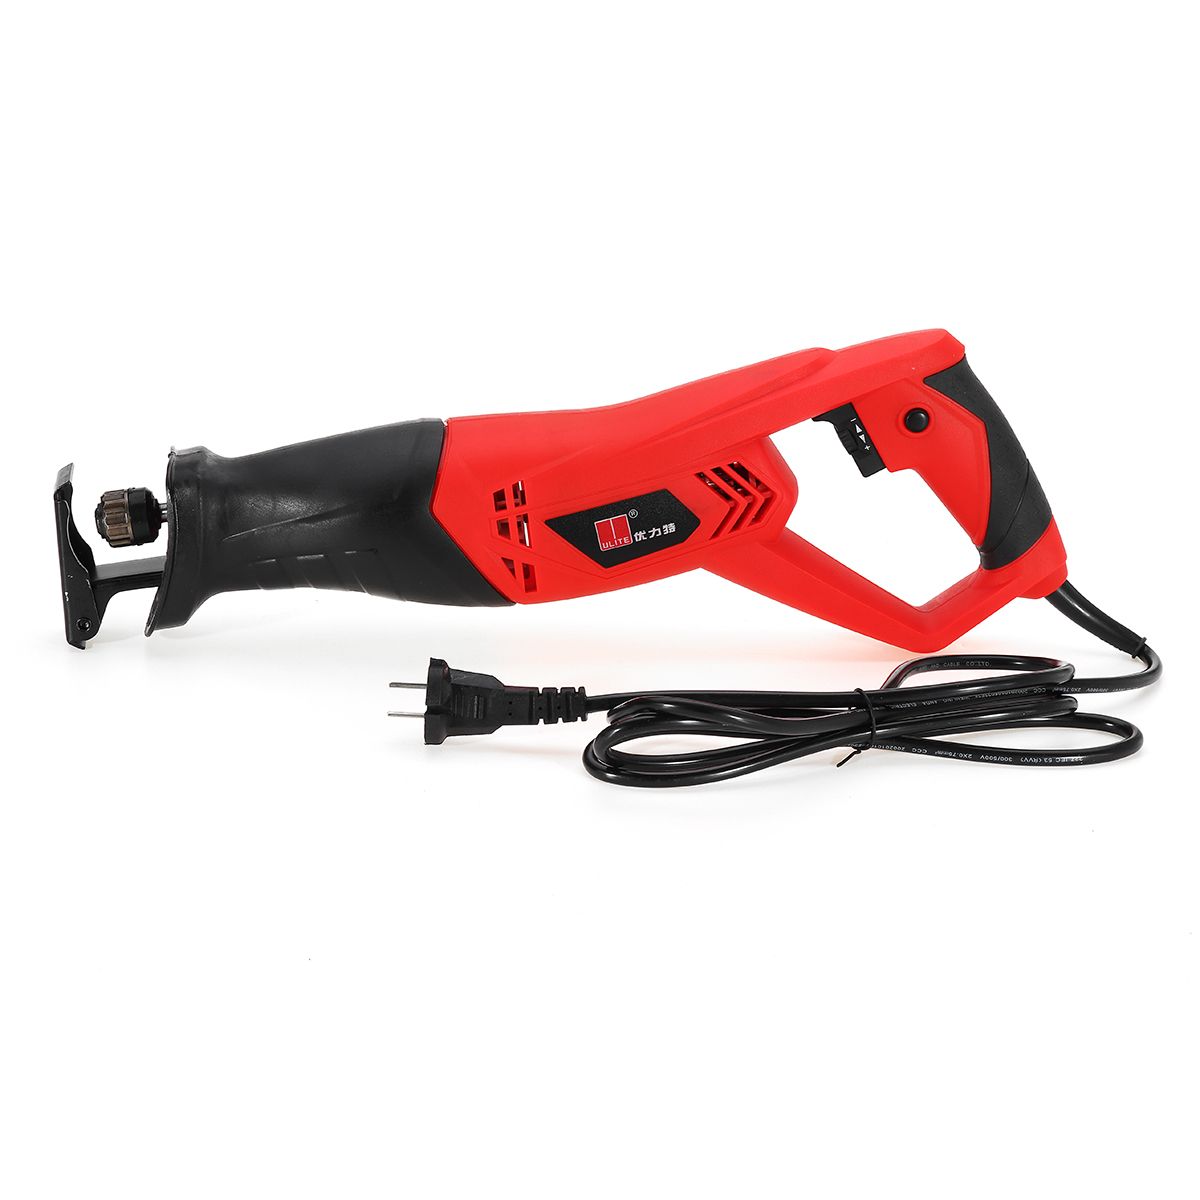 220V-900W-Electric-Reciprocating-Sabre-Saw-2-Blades-Wood-Metal-Plastic-Pruning-Tool-1424170